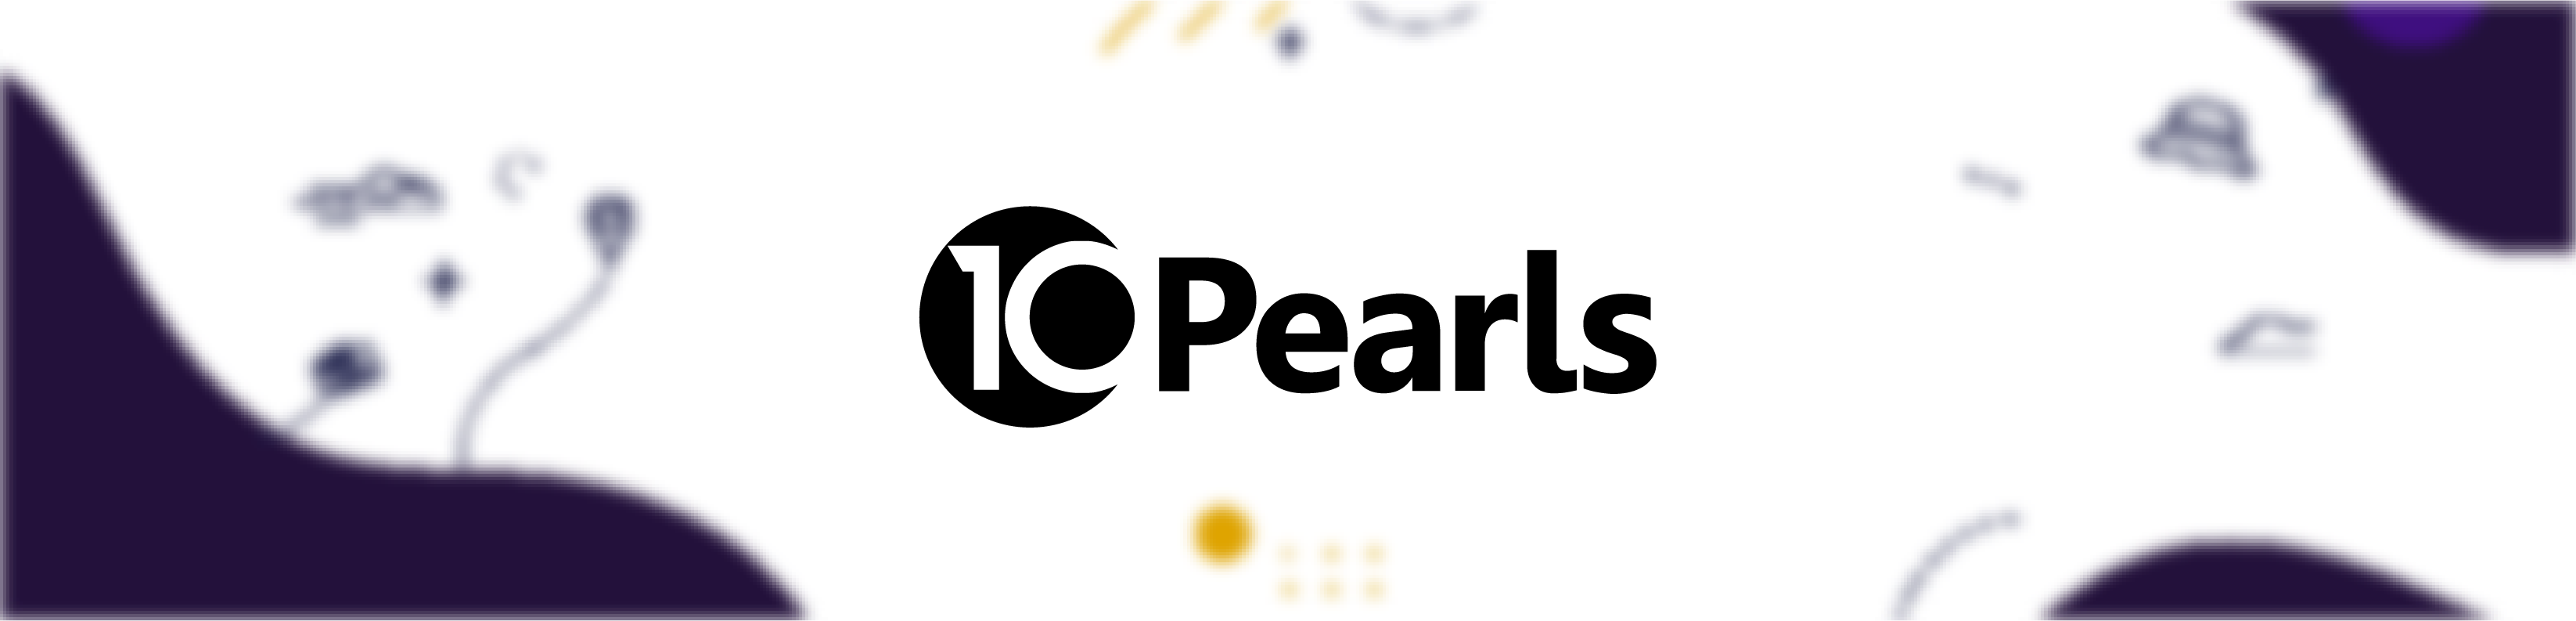 10 pearls